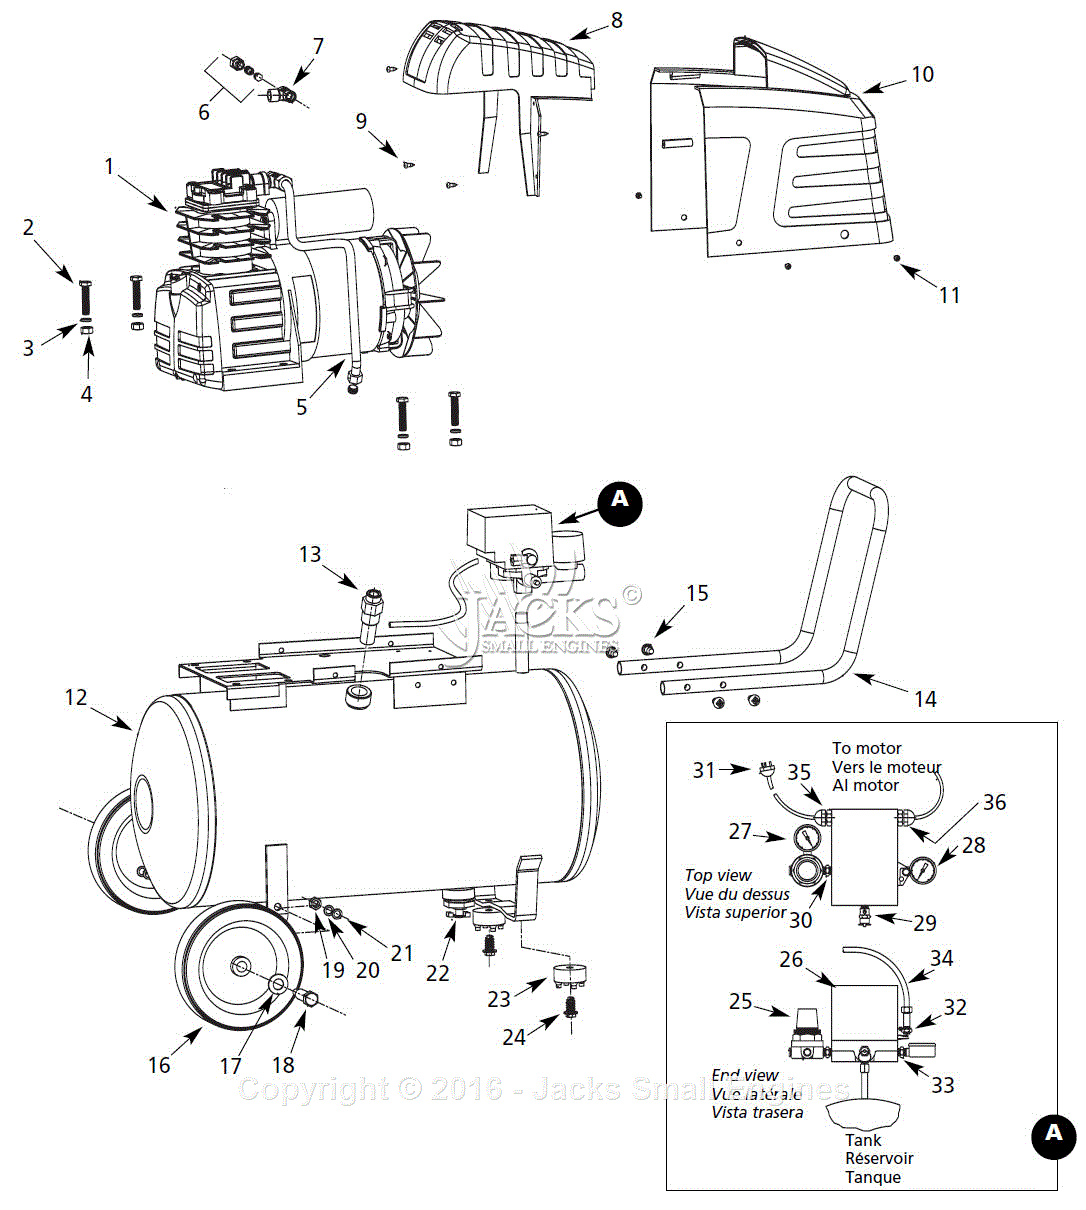 DIAGRAM Reciprocating Air Compressor Parts Diagram MYDIAGRAM ONLINE